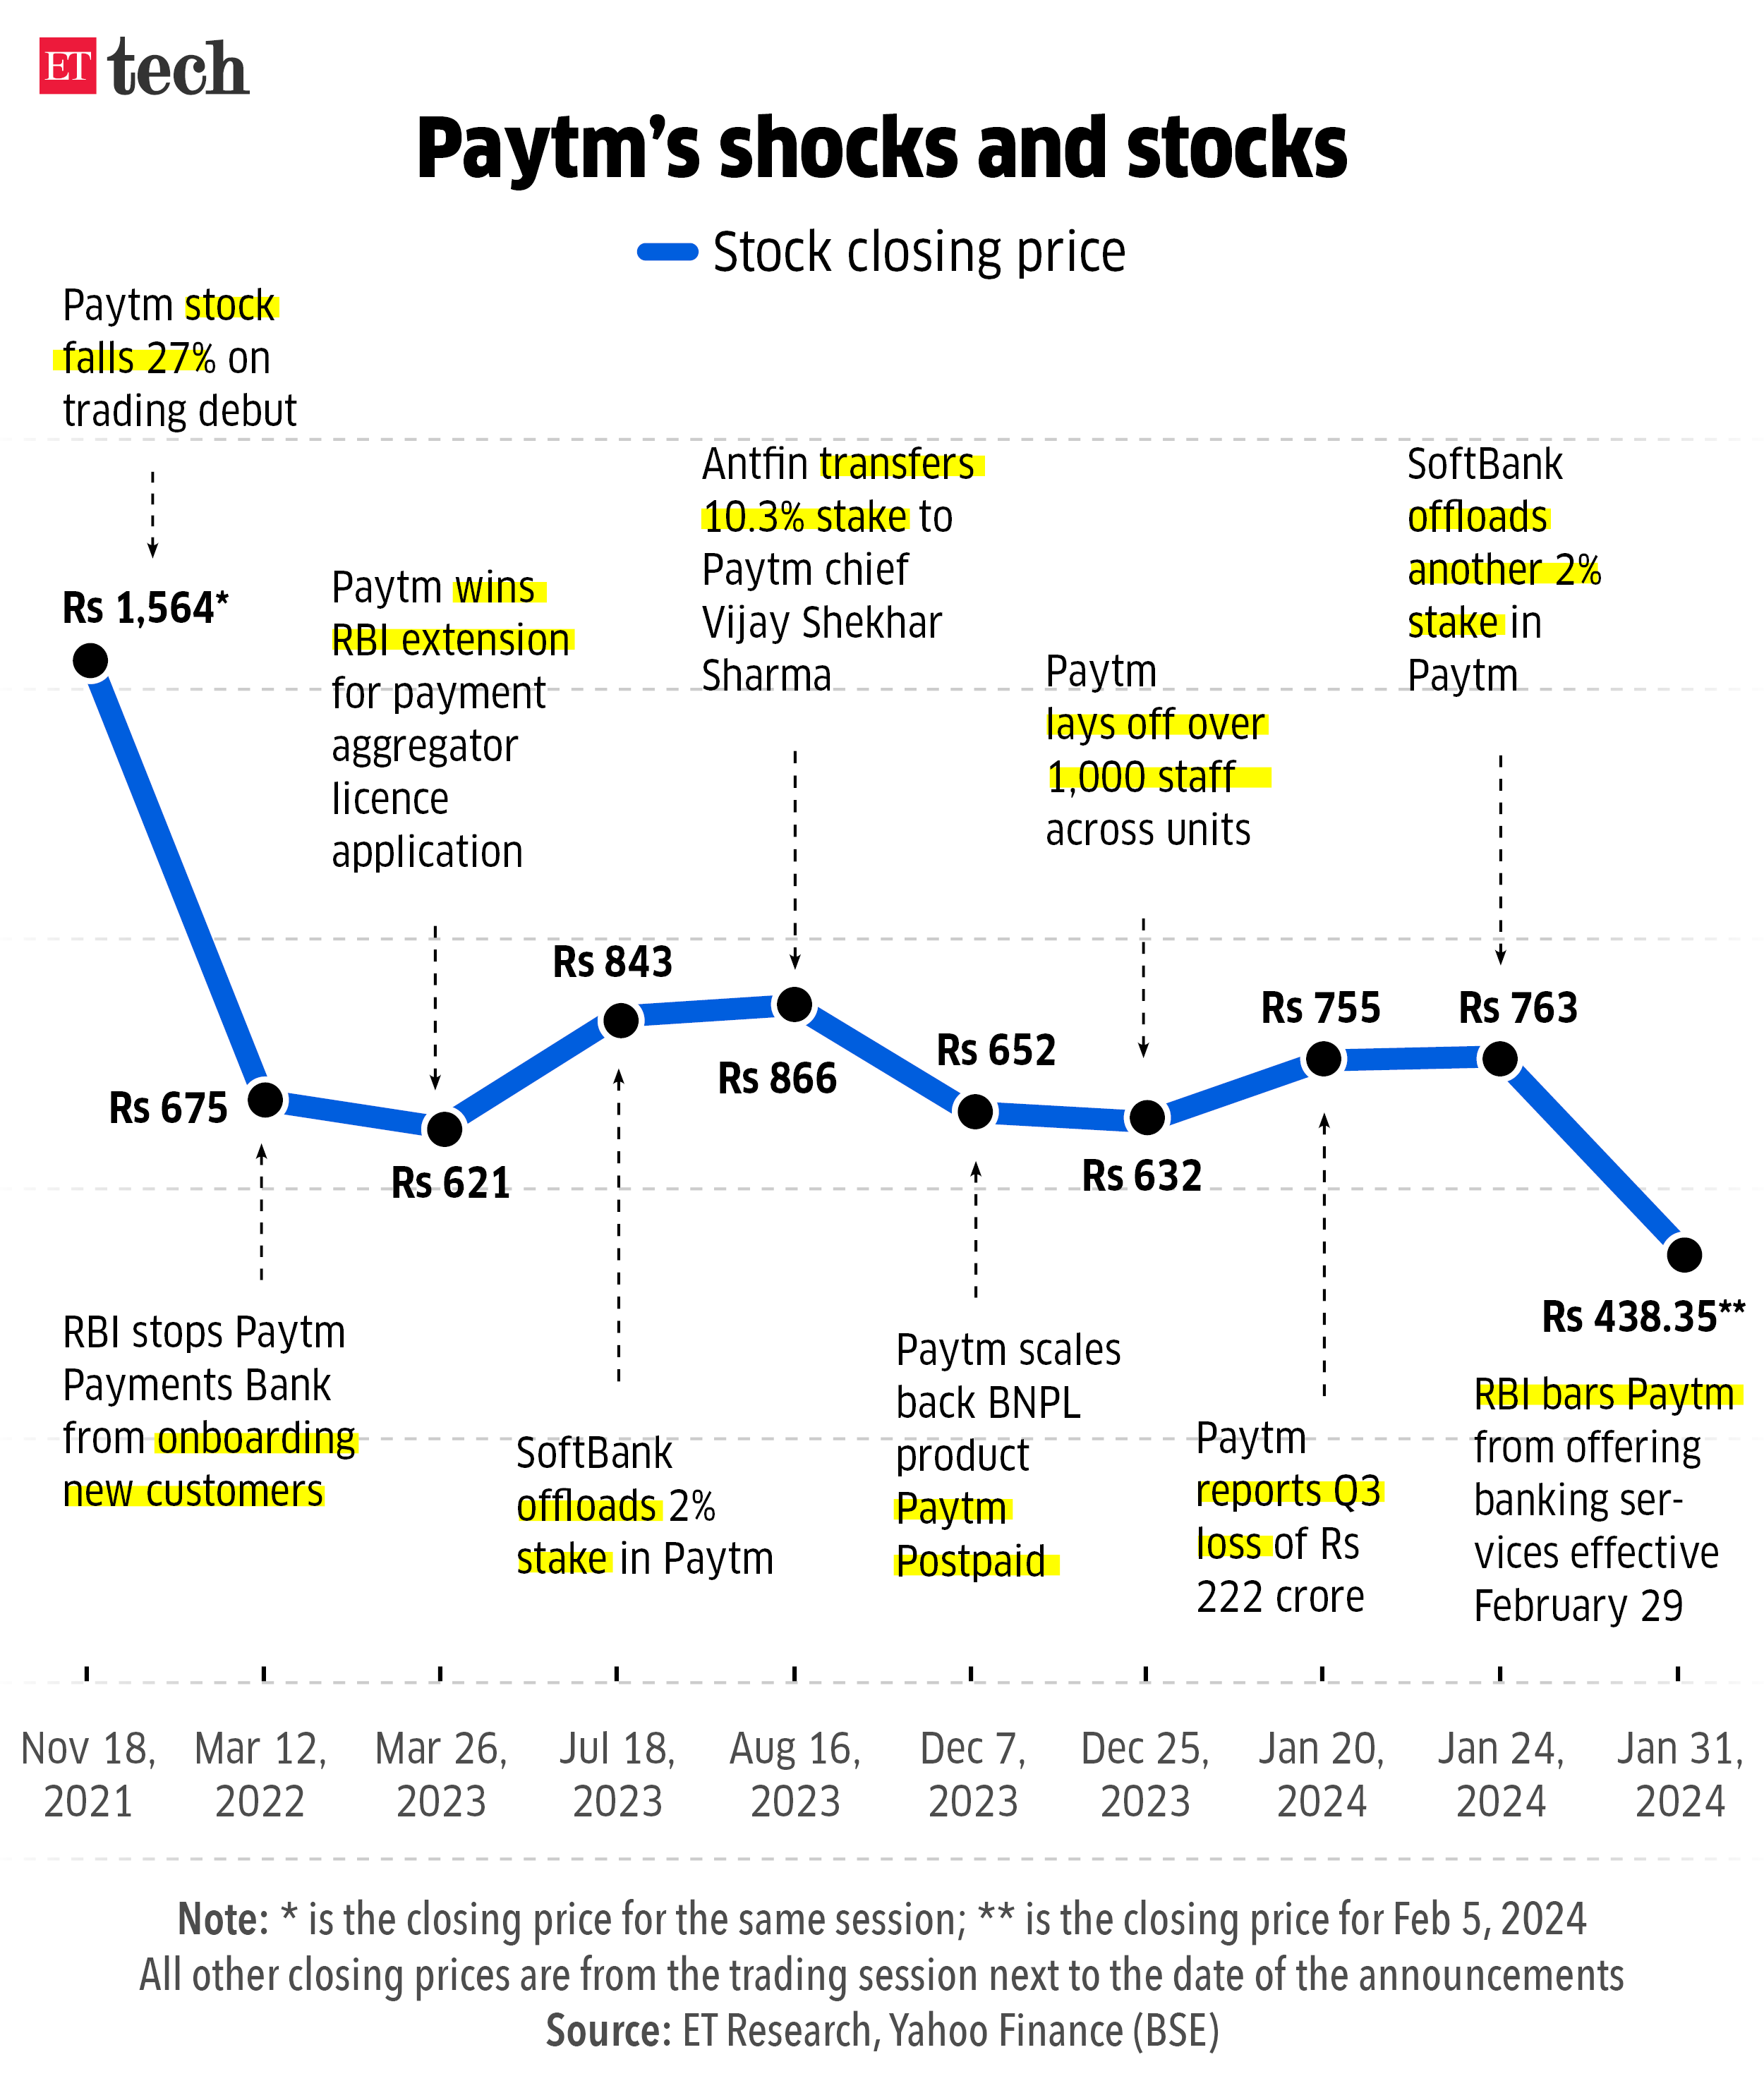 Paytm shocks and stocks_Feb 2024_Graphic_ETTECH (1)